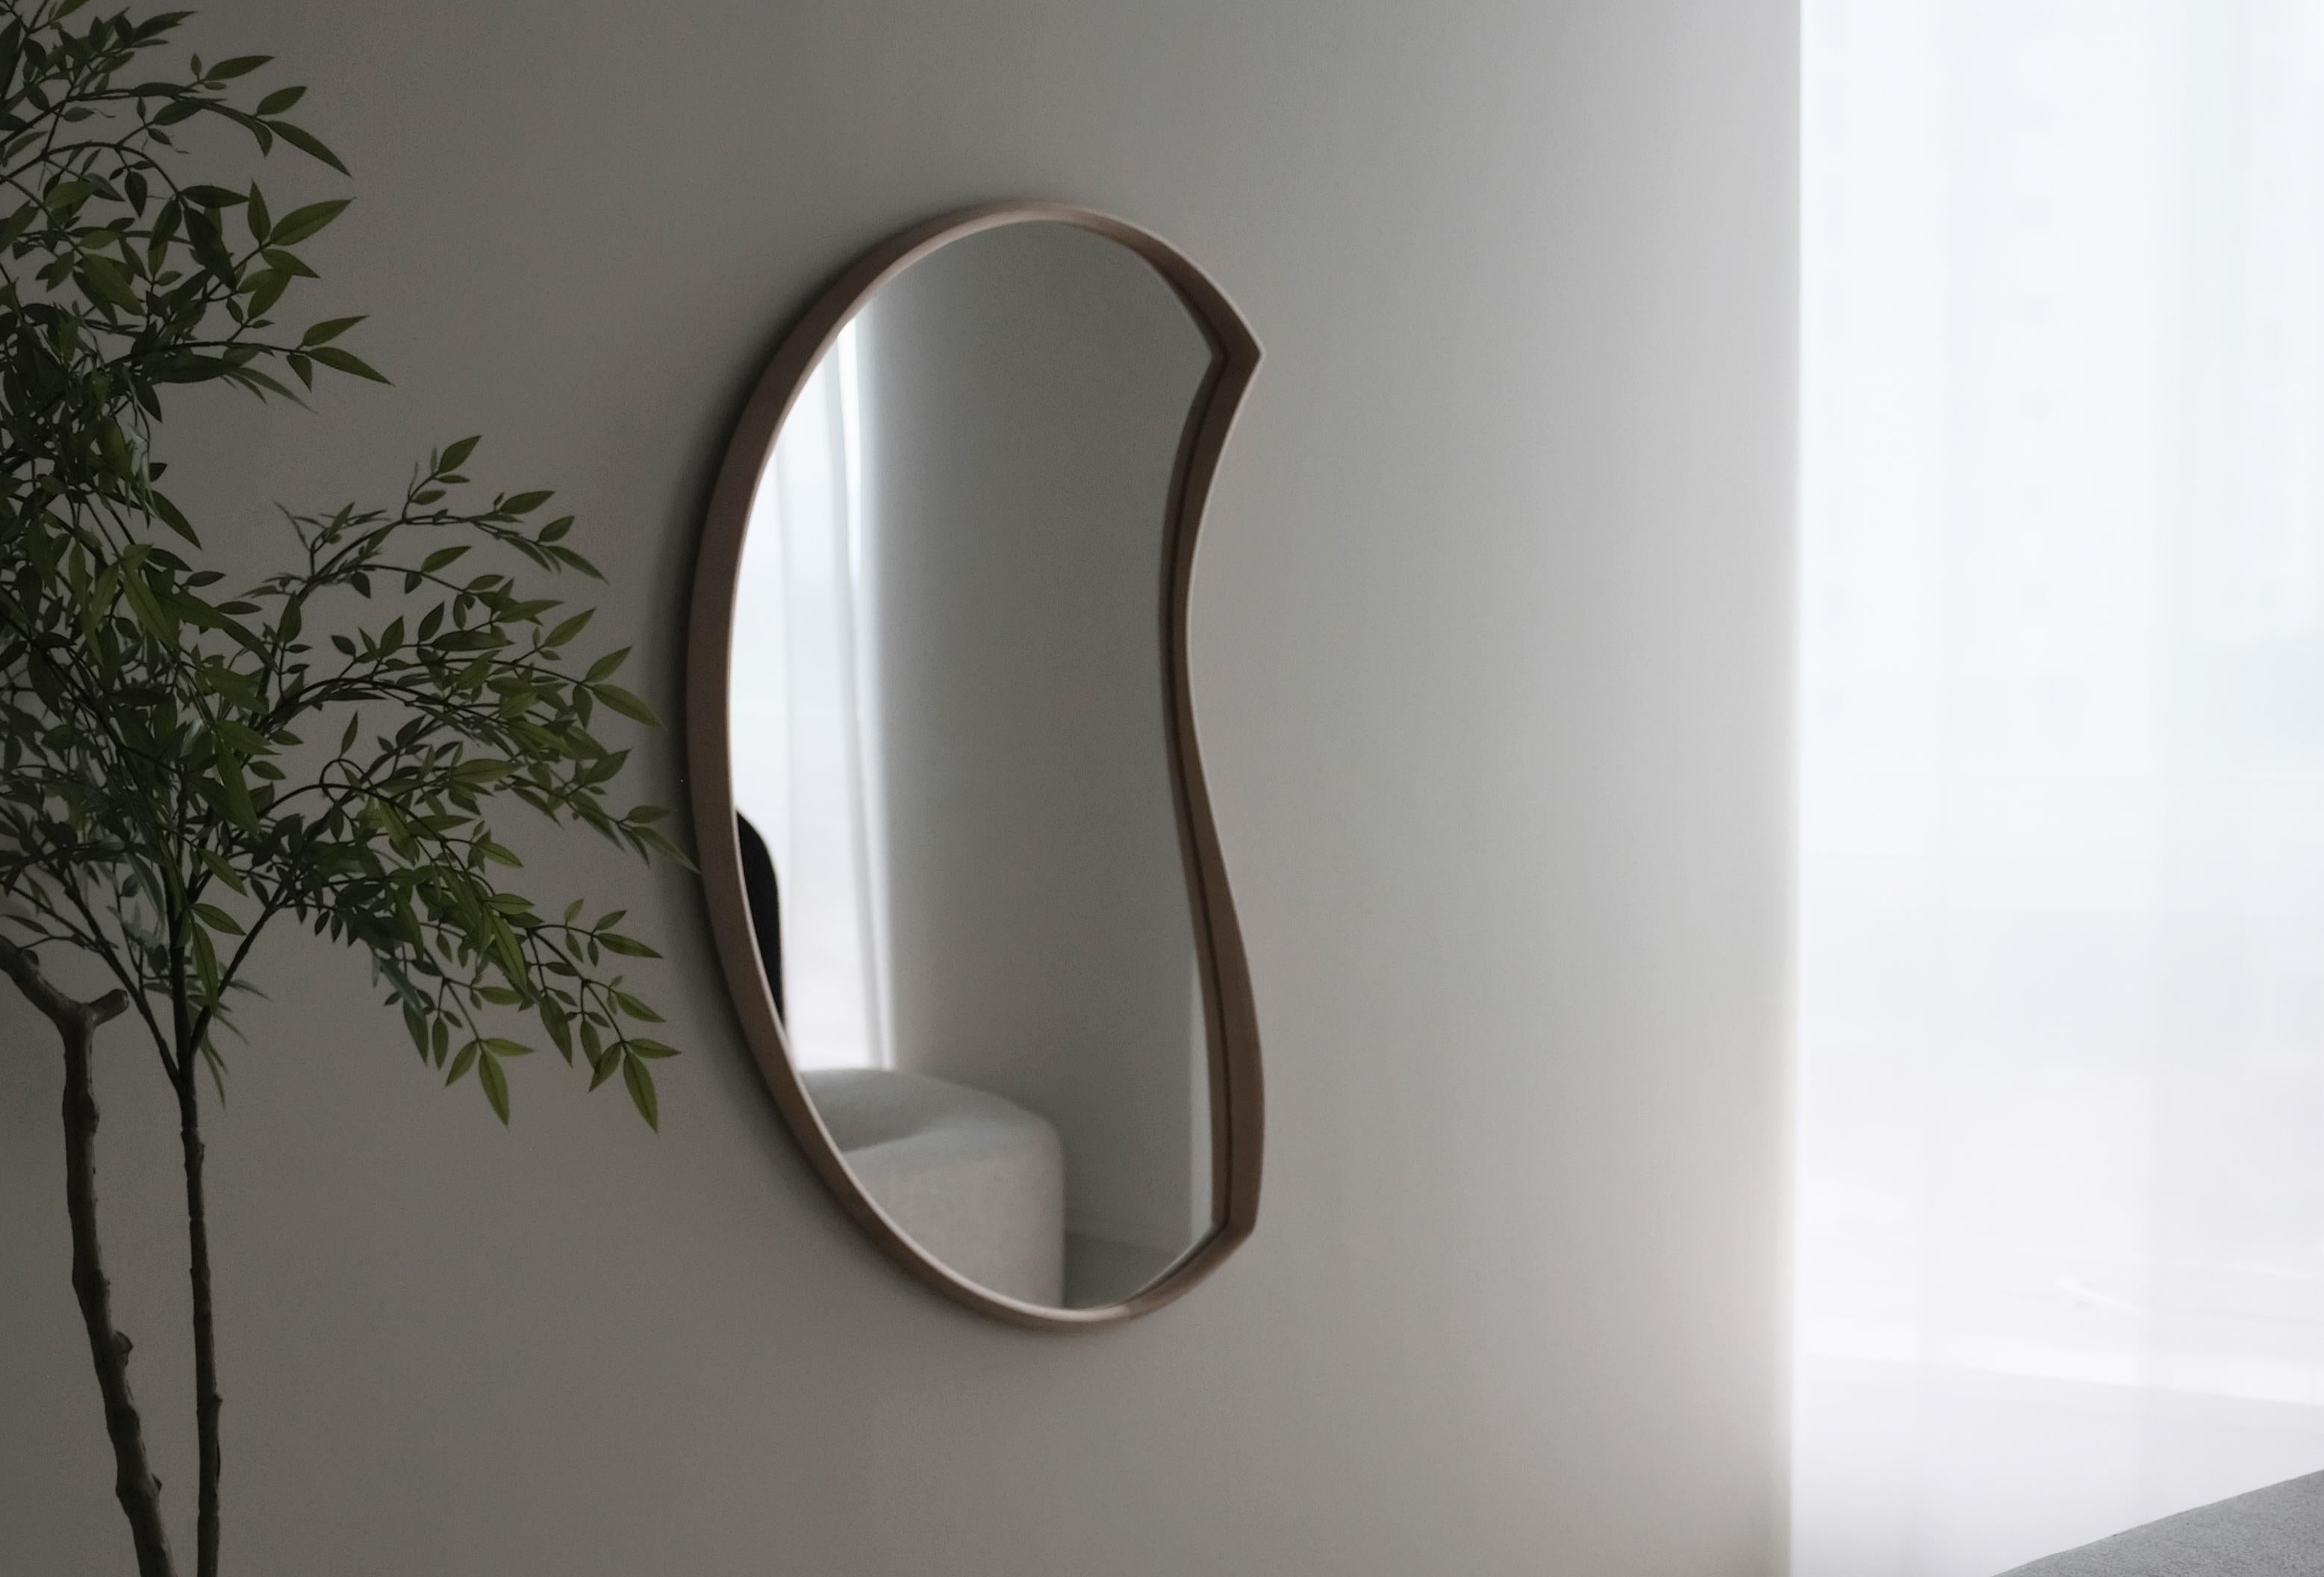 Hand-Carved Asymmetric Wood Mirror, Organic Moon Wall Mirror (Medium) by Soo Joo  For Sale